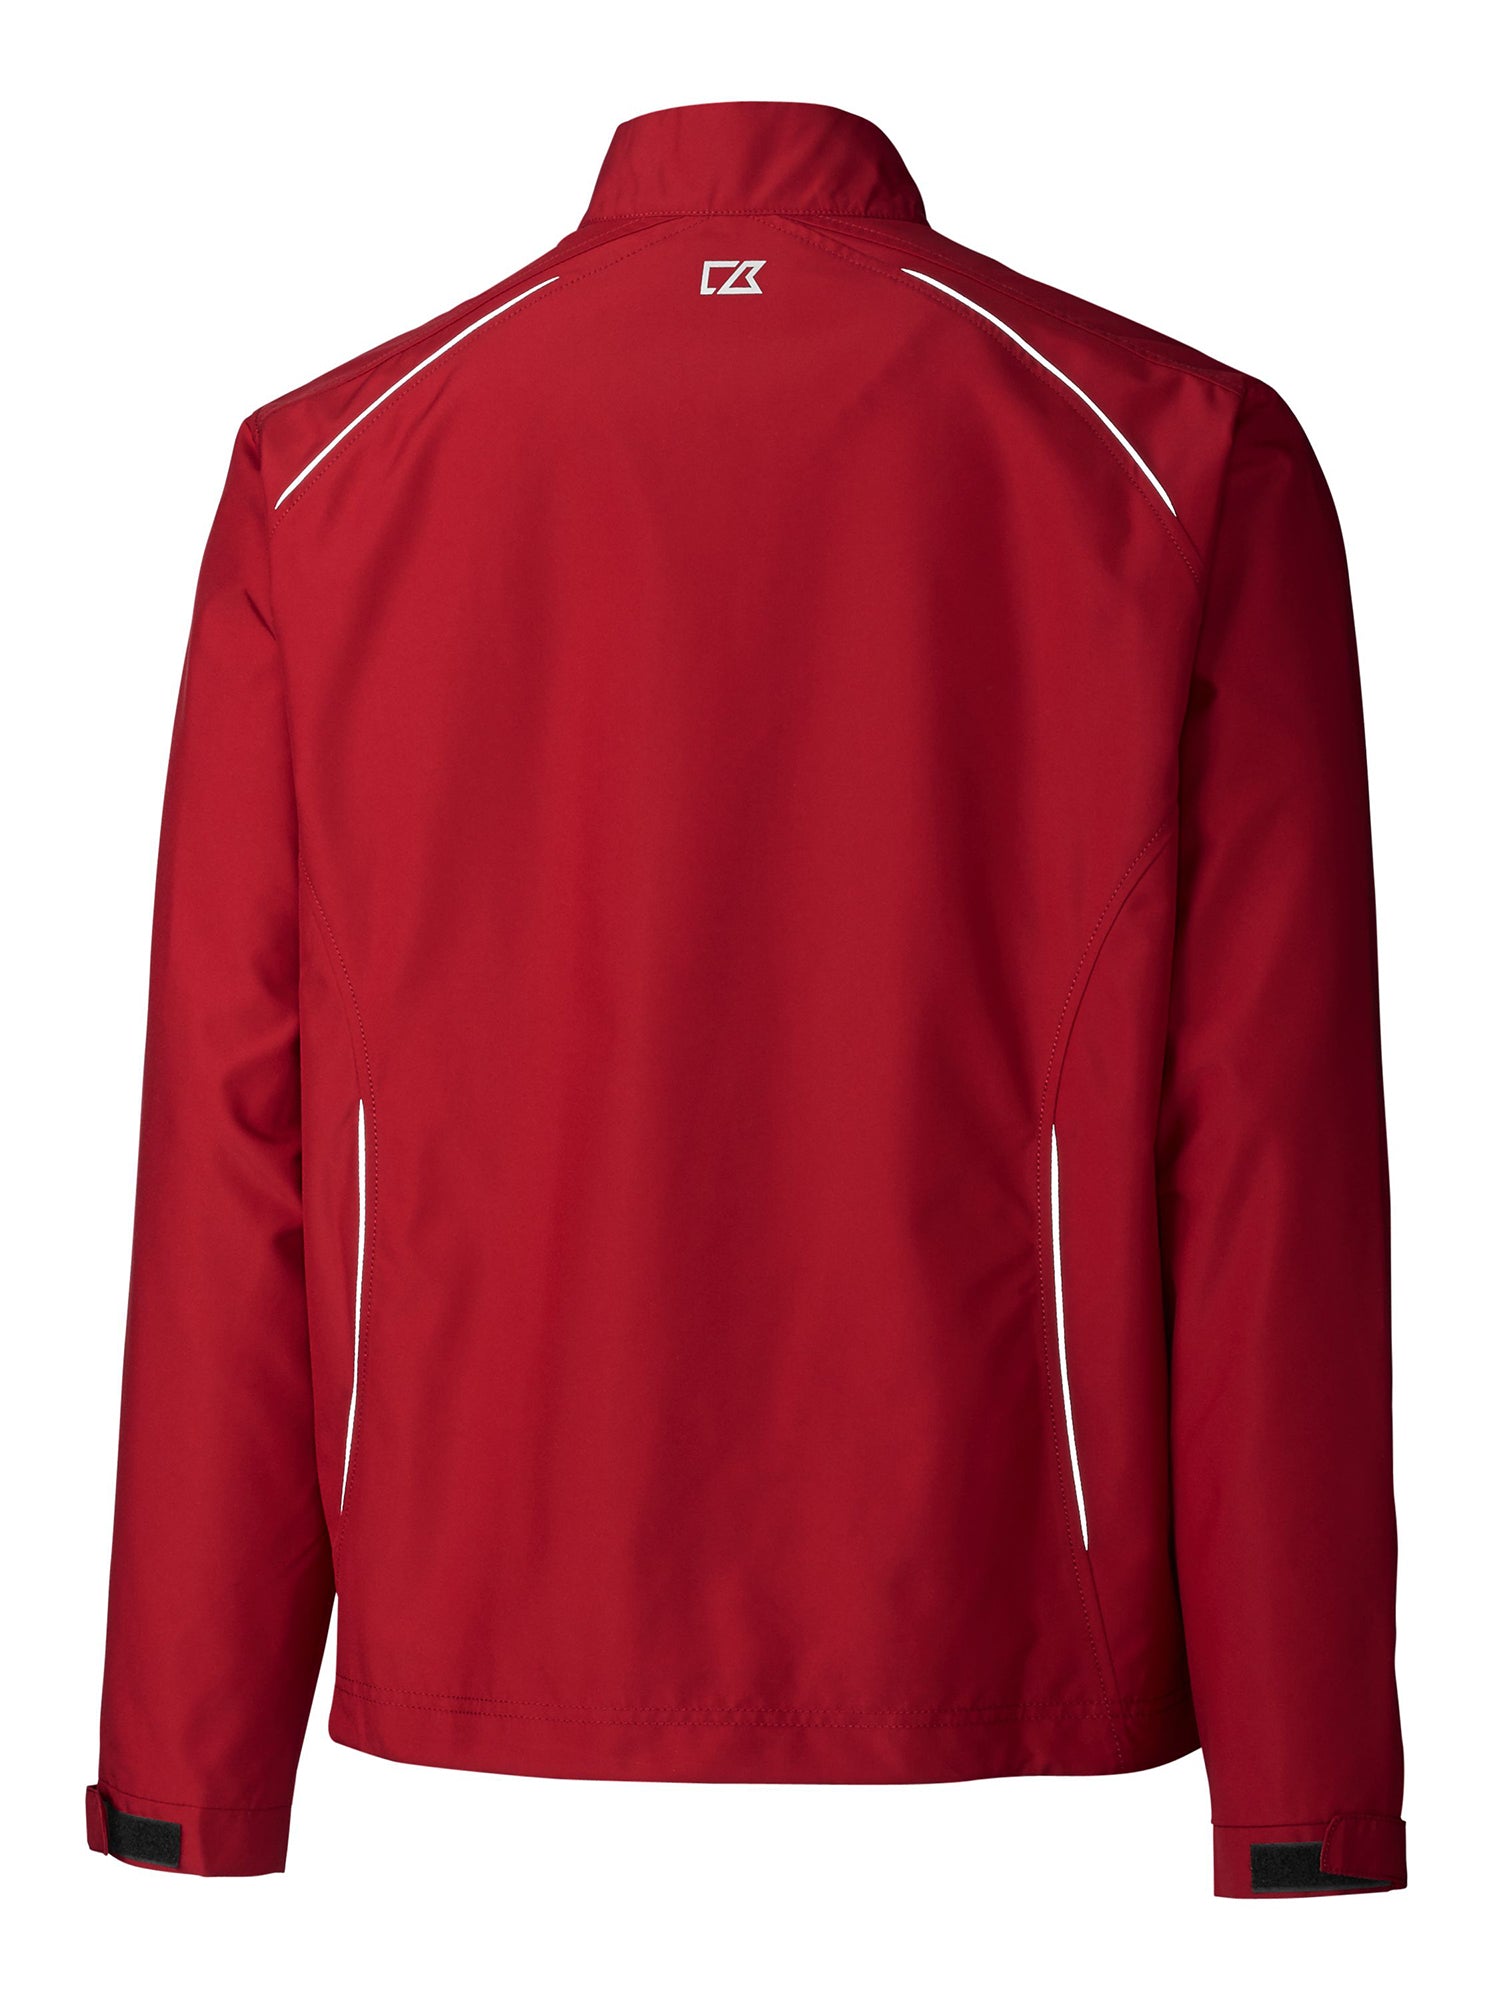 Cutter & Buck Beacon Full Zip Jacket in Cardinal Red-2